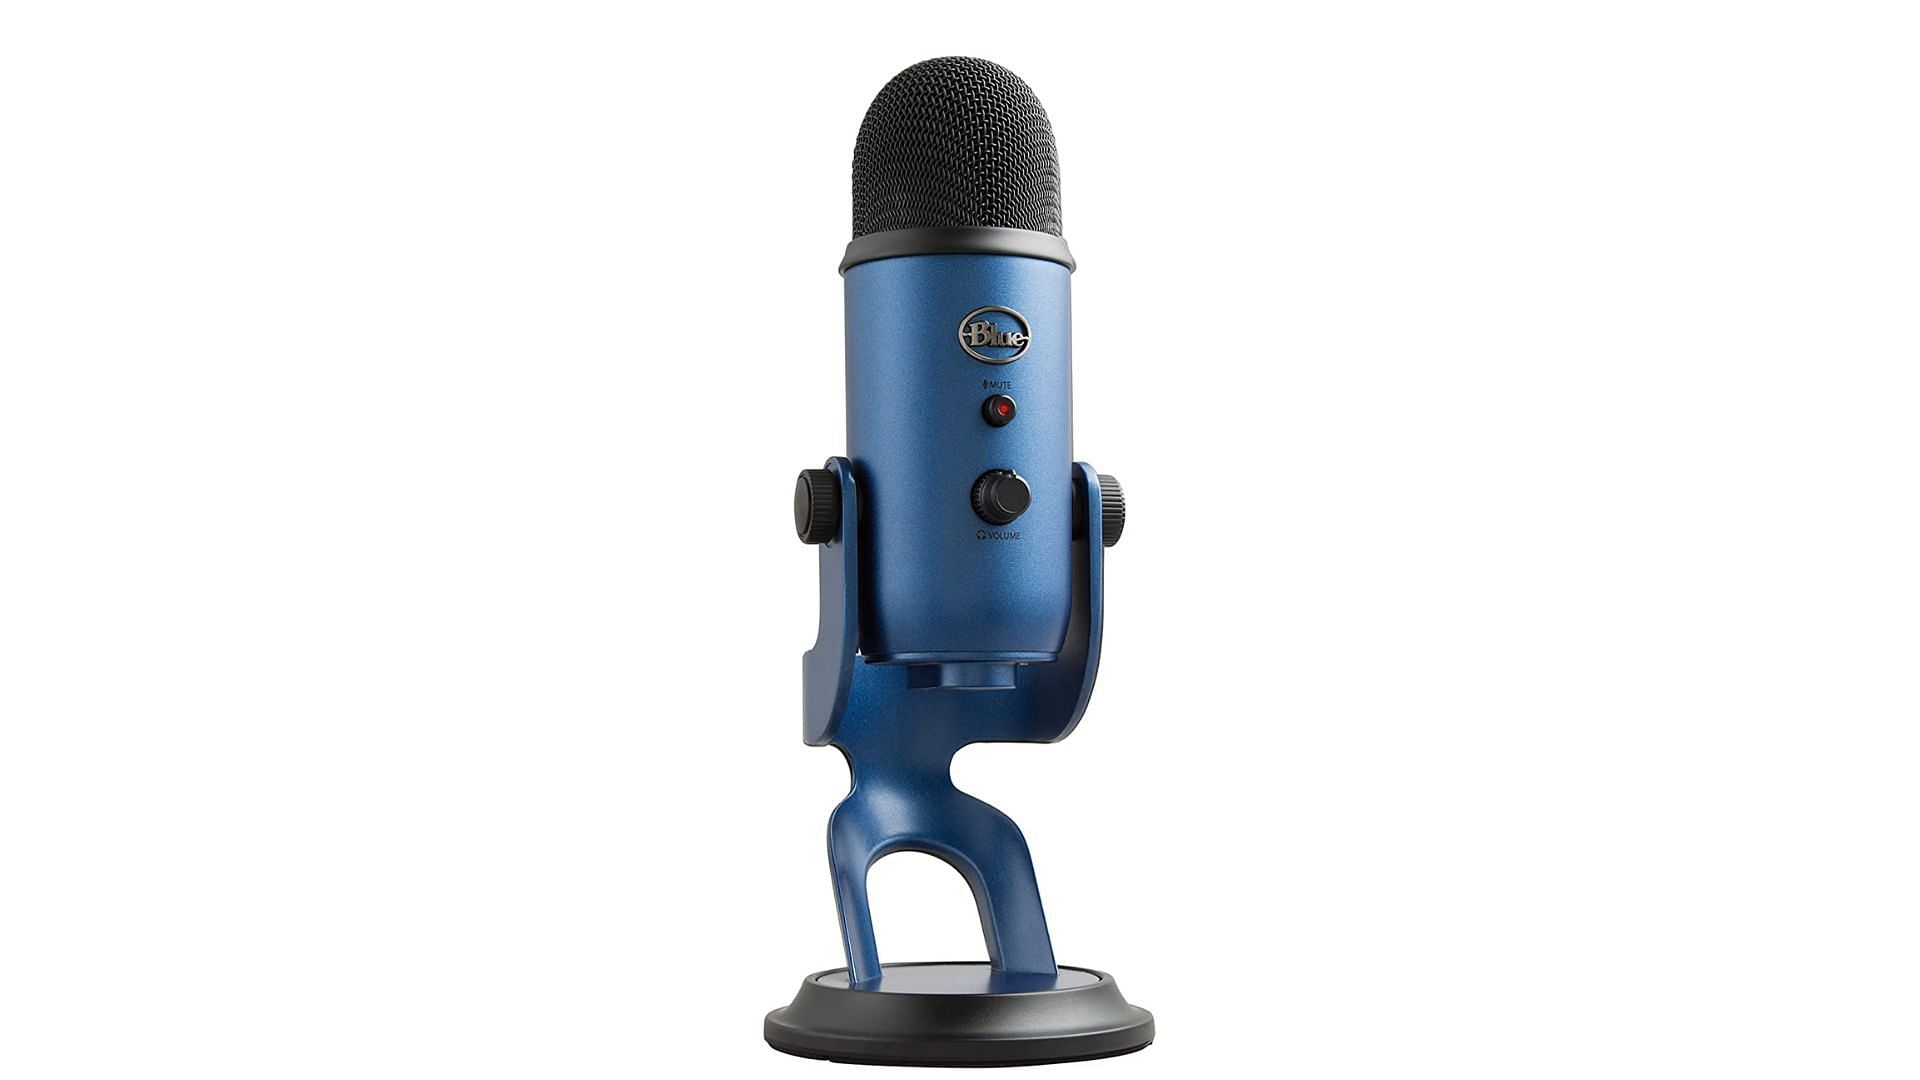 The Blue Yeti microphone (Image via Amazon)